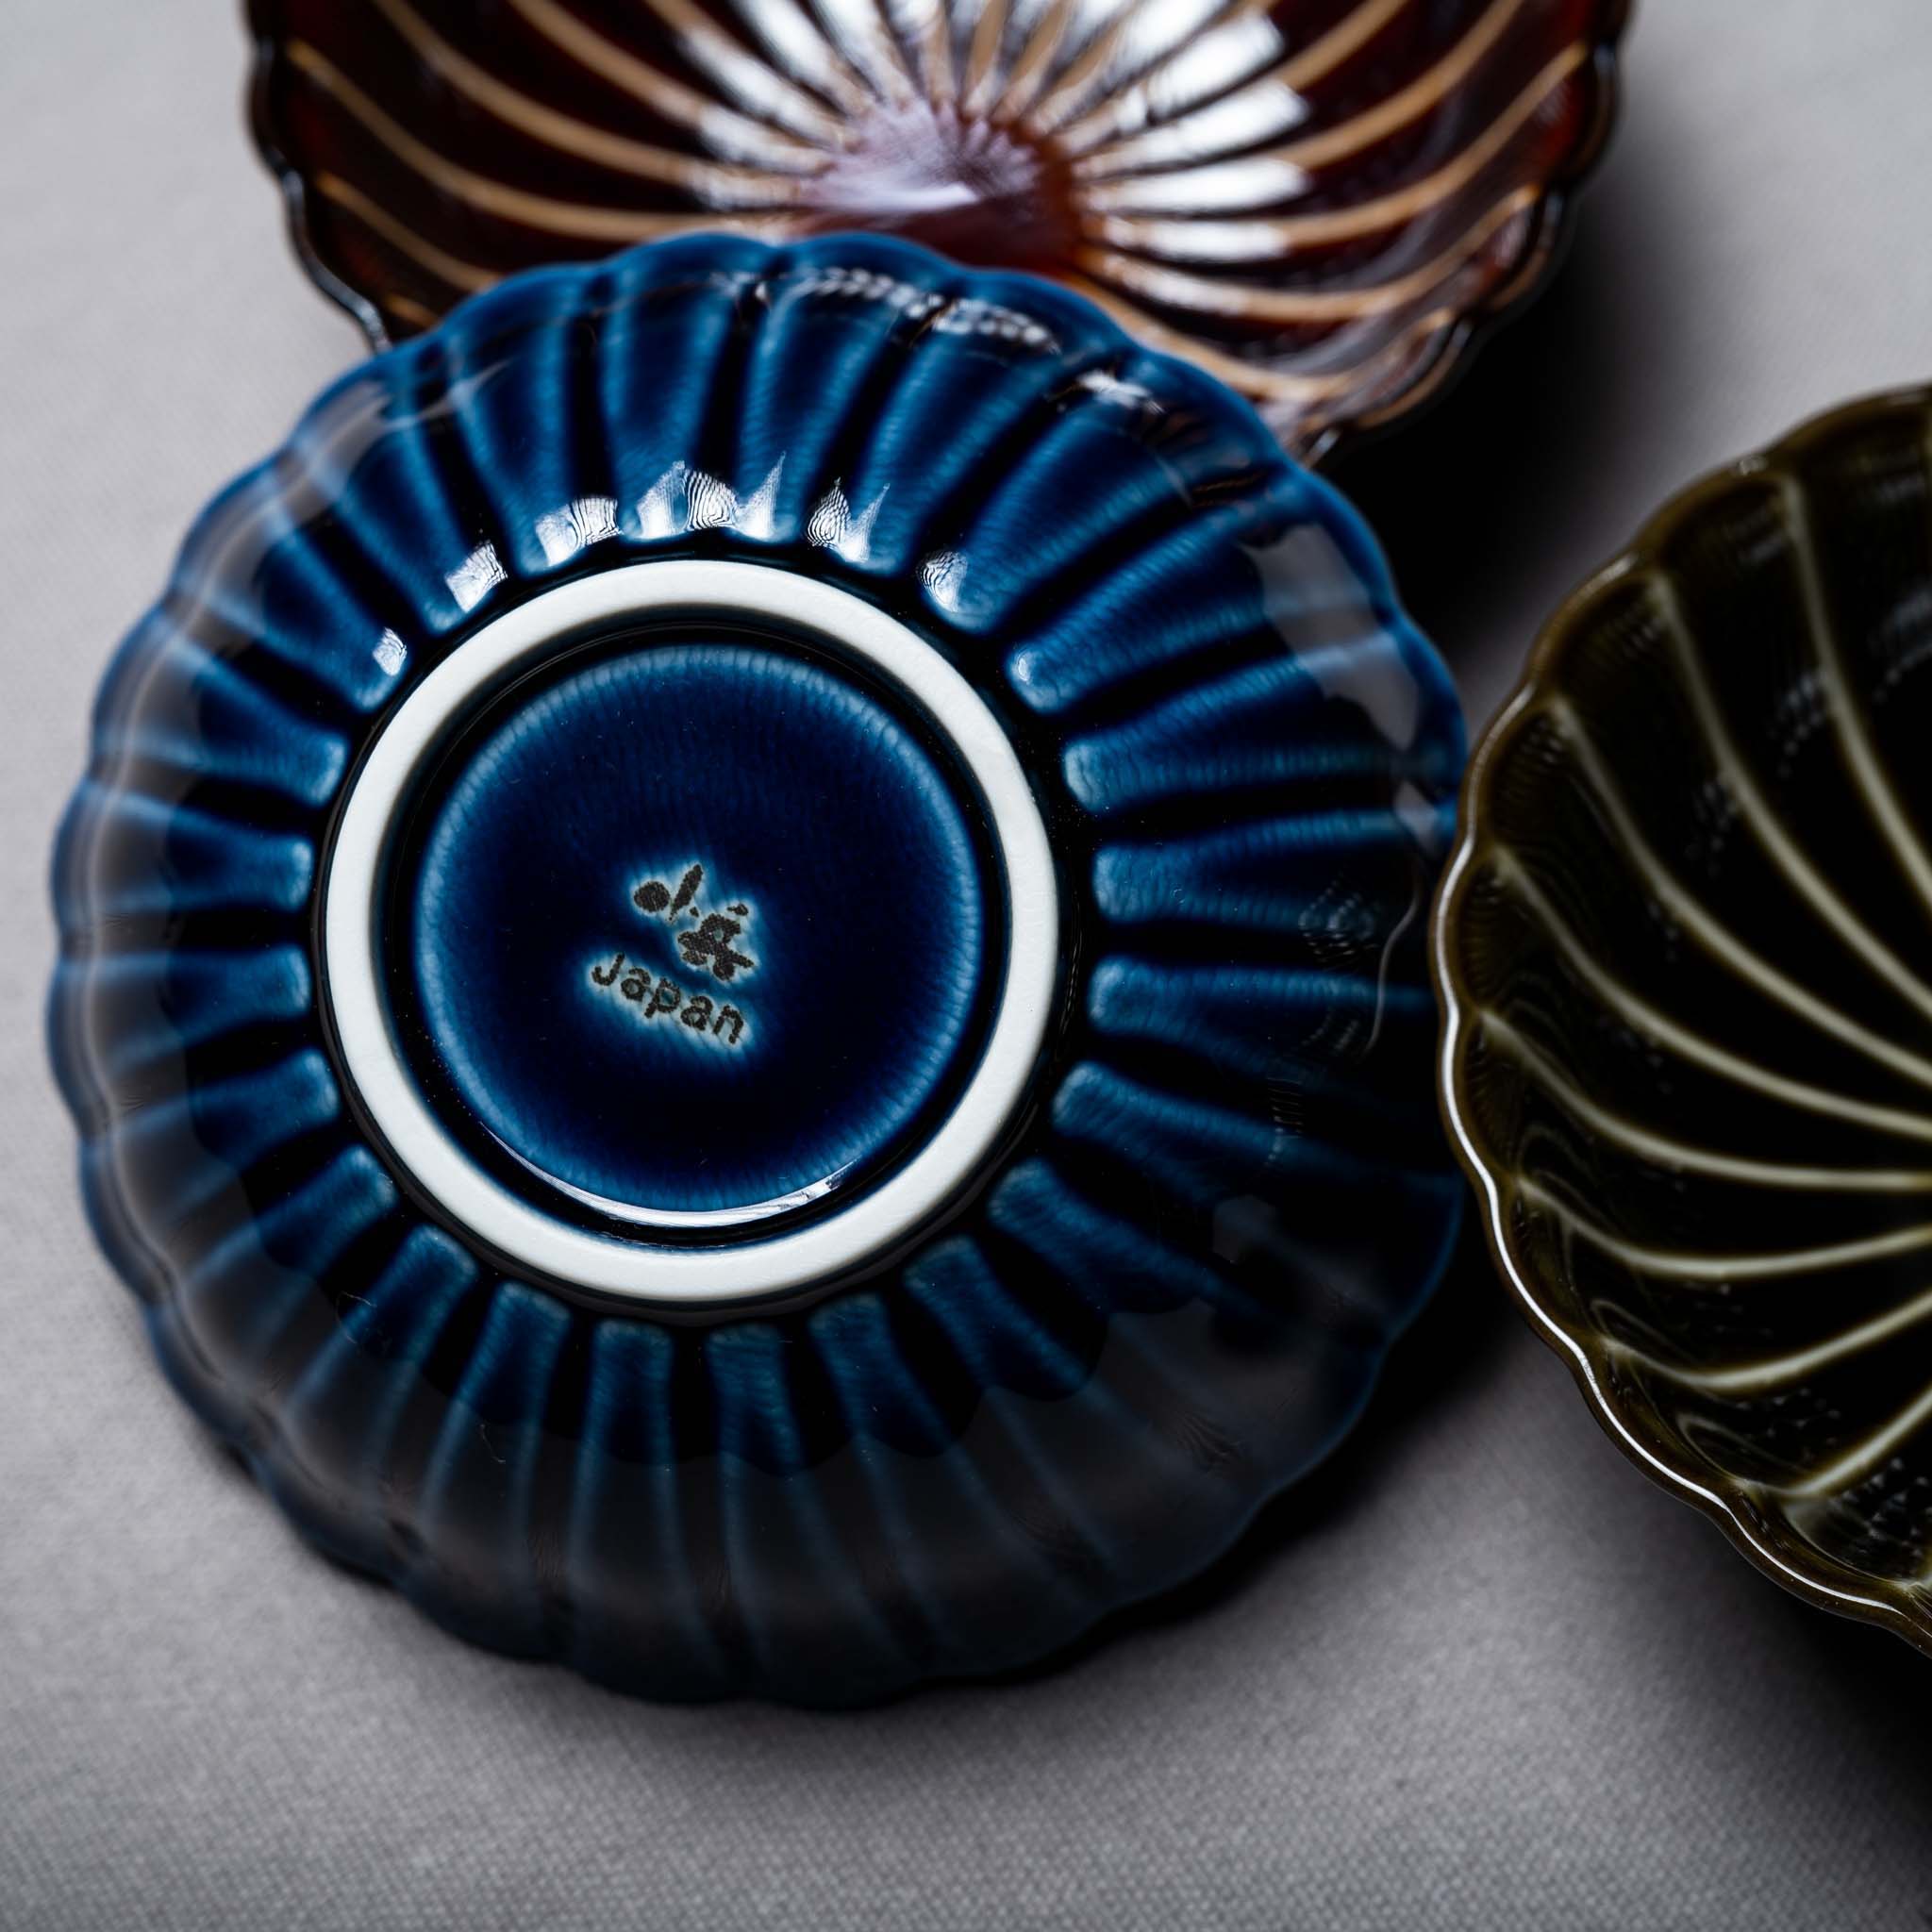 Kaneko Pottery Giyaman Series / 12 cm Bowl - Navy Blue